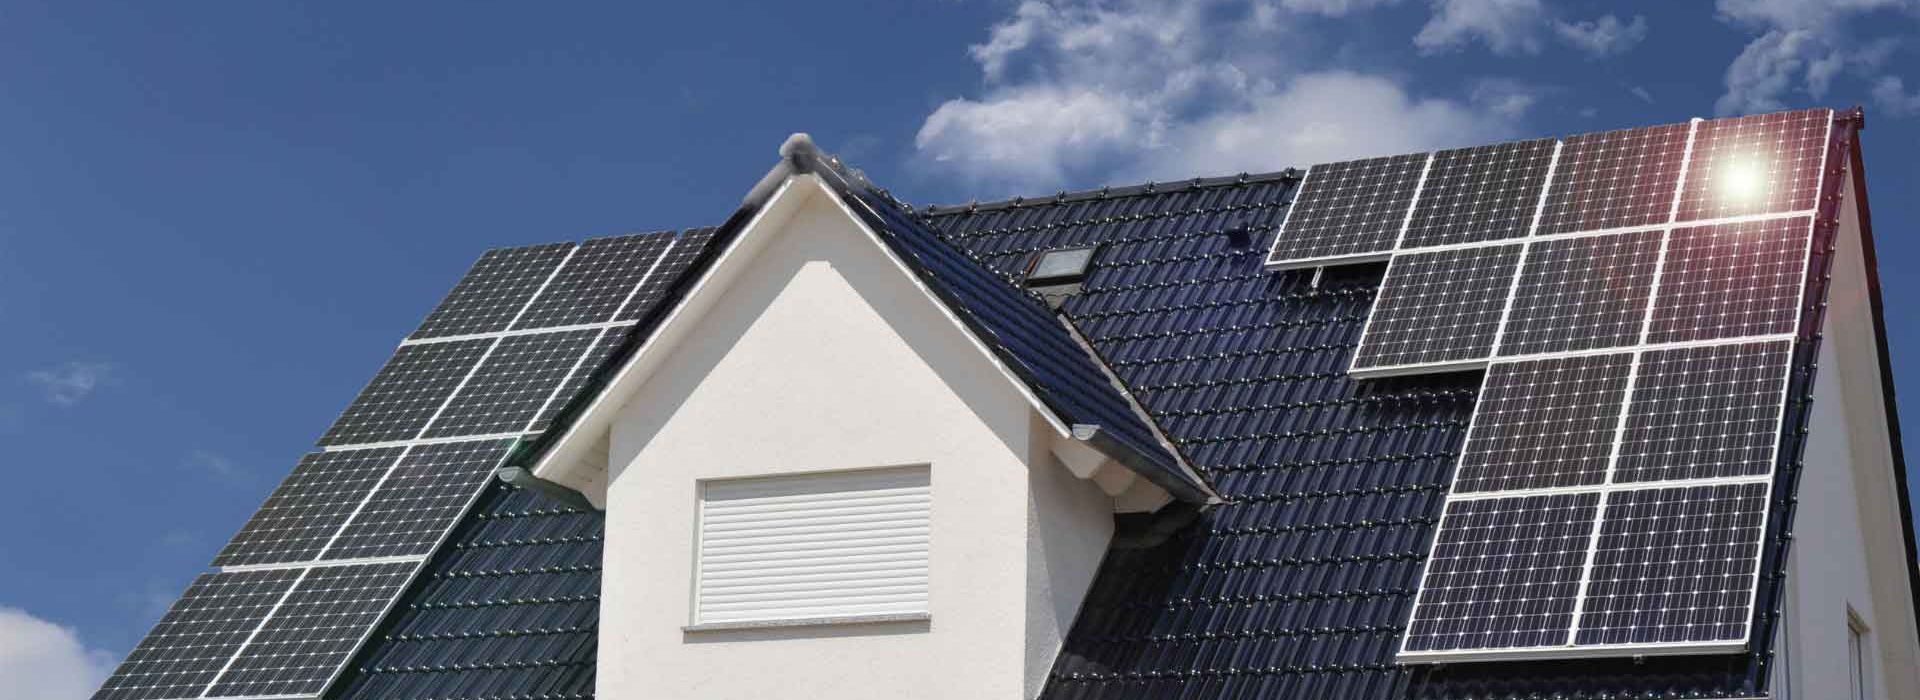 solar panels cost dudley